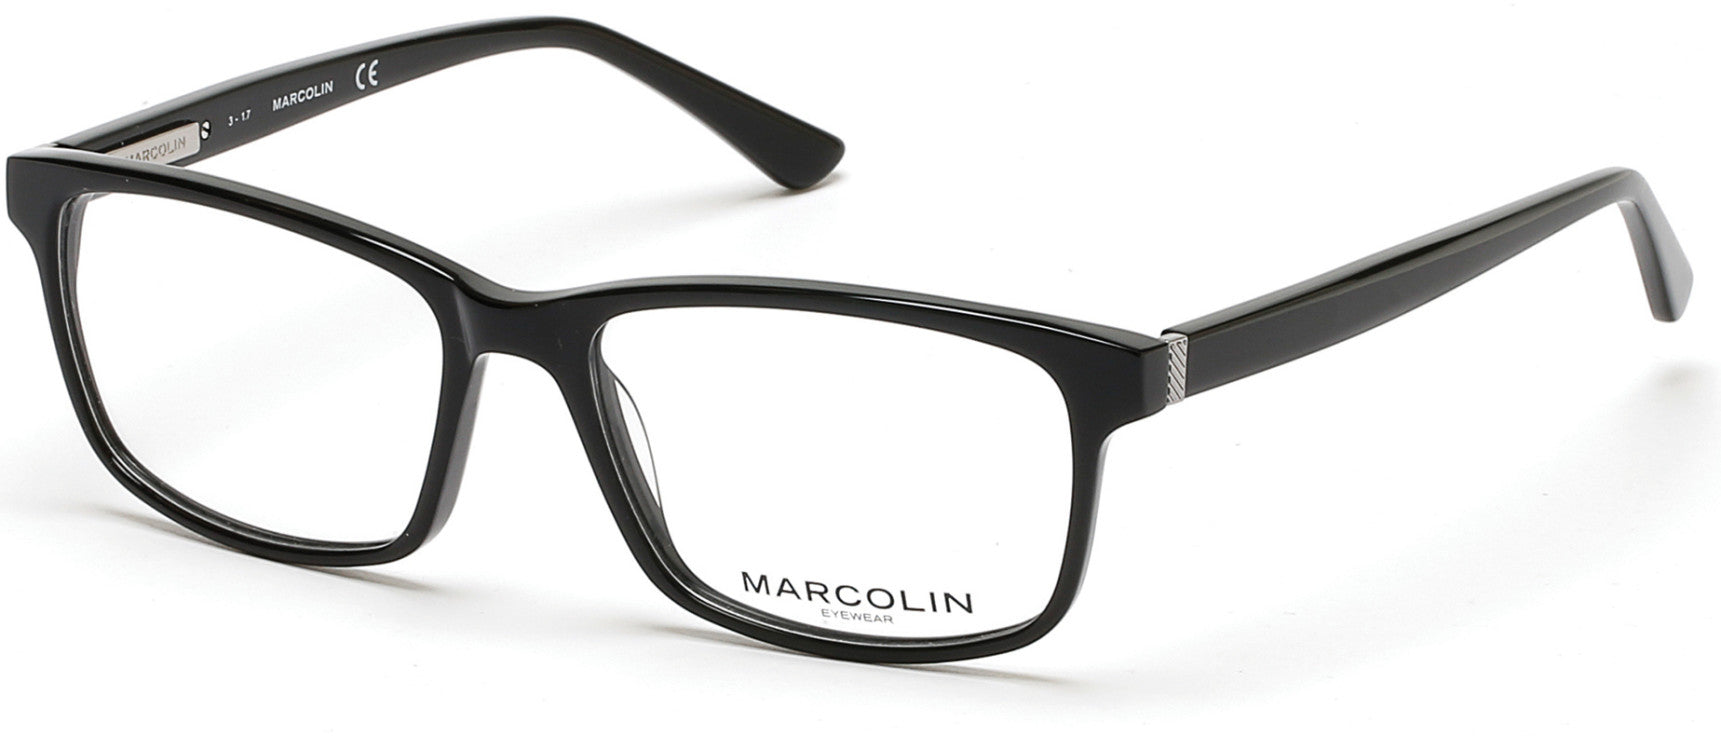 Marcolin MA3011 Eyeglasses 001-001 - Shiny Black